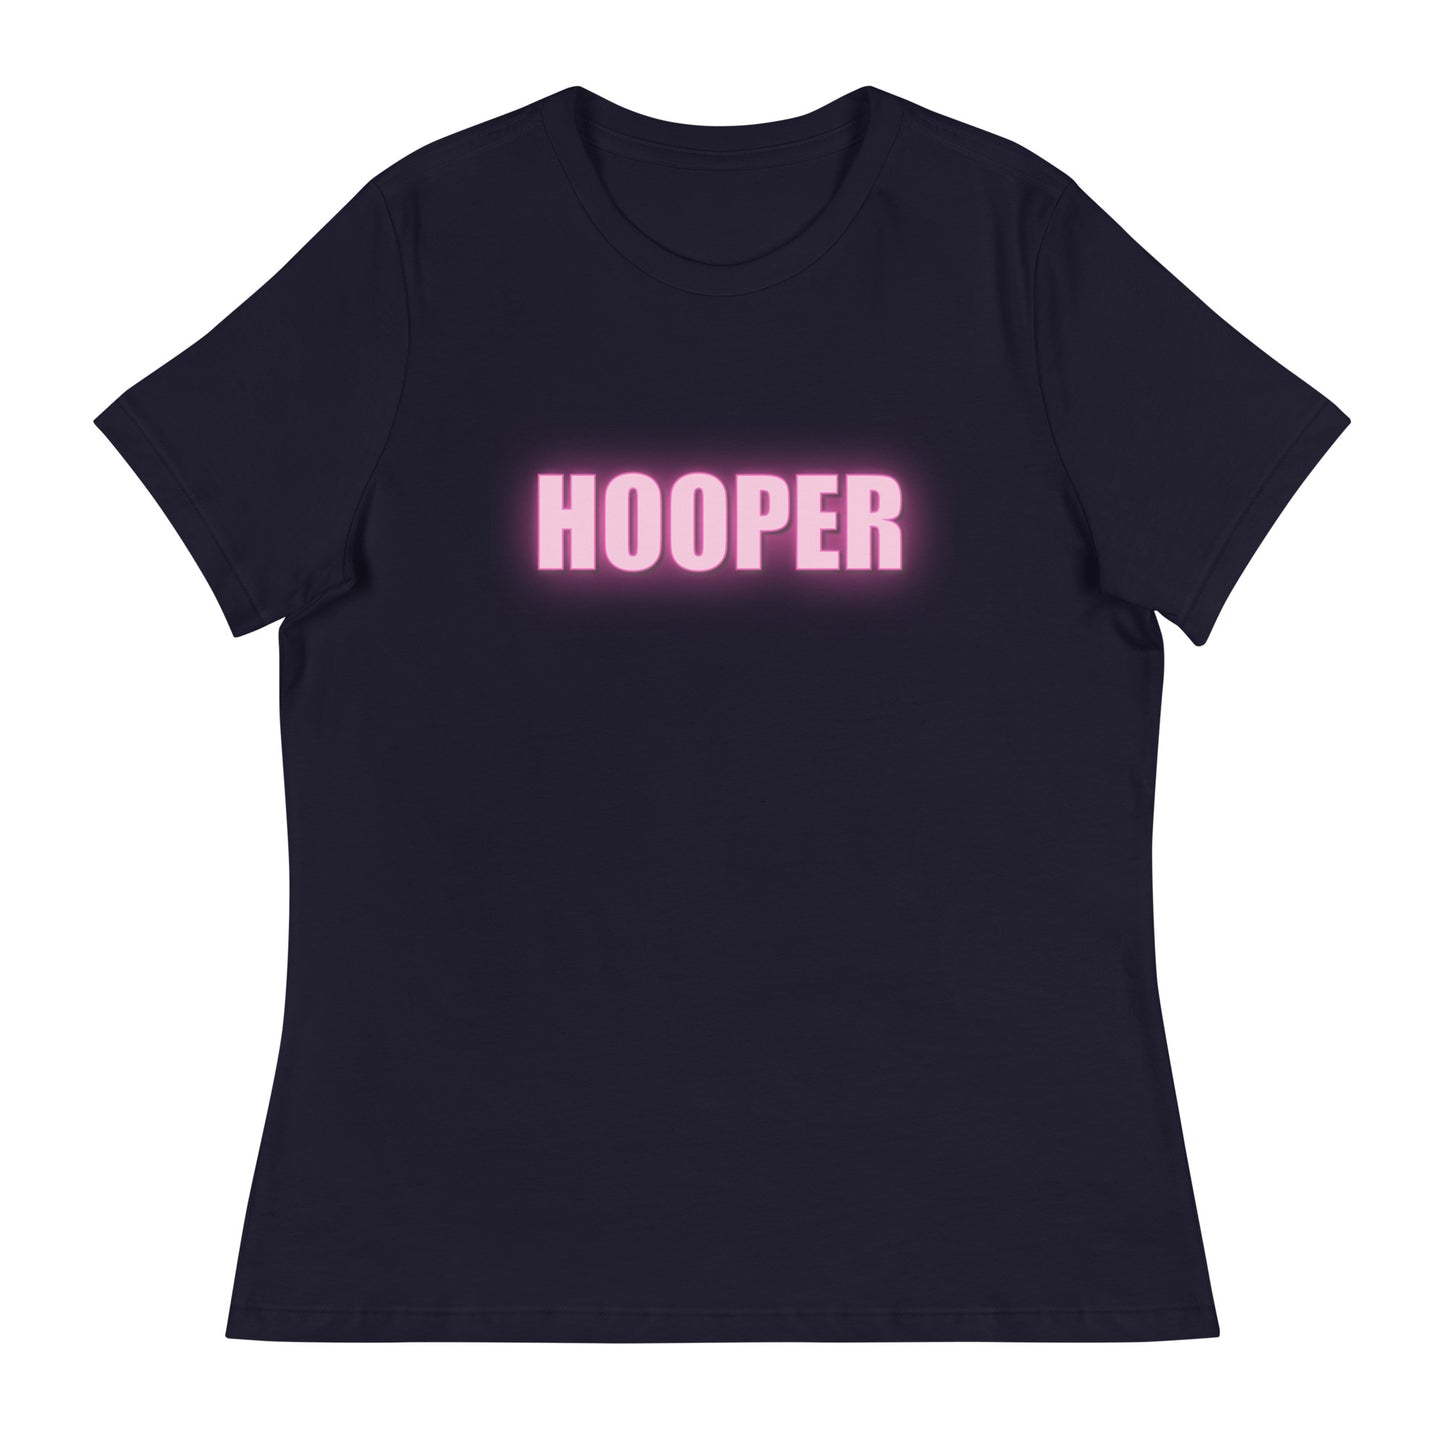 Hooper Pink Women's Relaxed T-Shirt - Soft, Relaxed Fit for Women